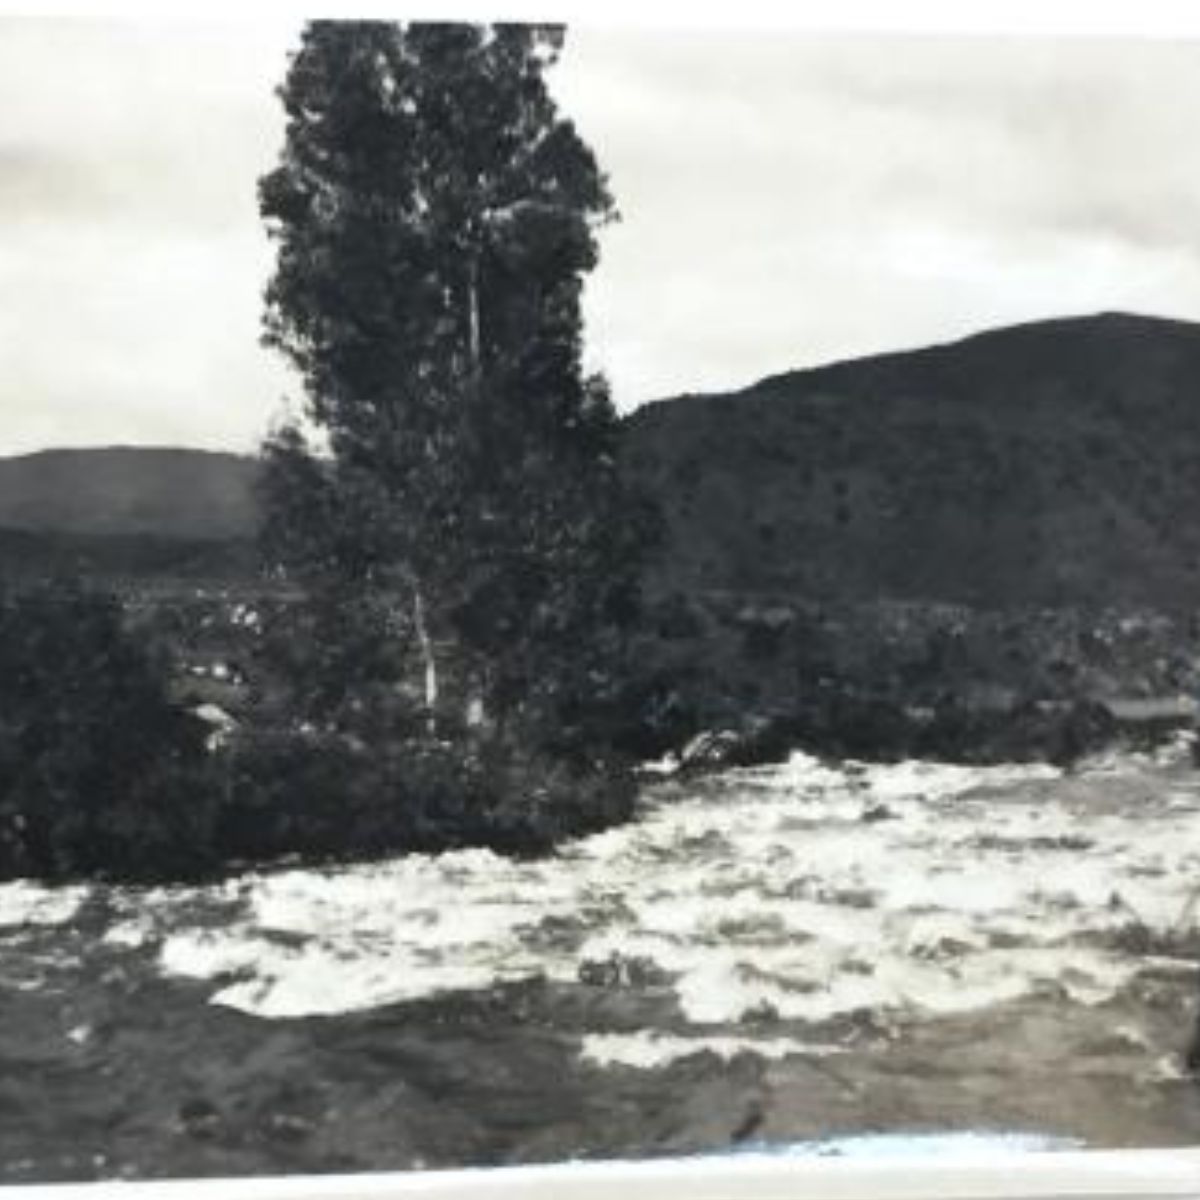 Río Tunjuelo Embalse La Regadera - La historia del embalse La Regadera, la primera hazaña de ingeniería que le suministró agua a Bogotá